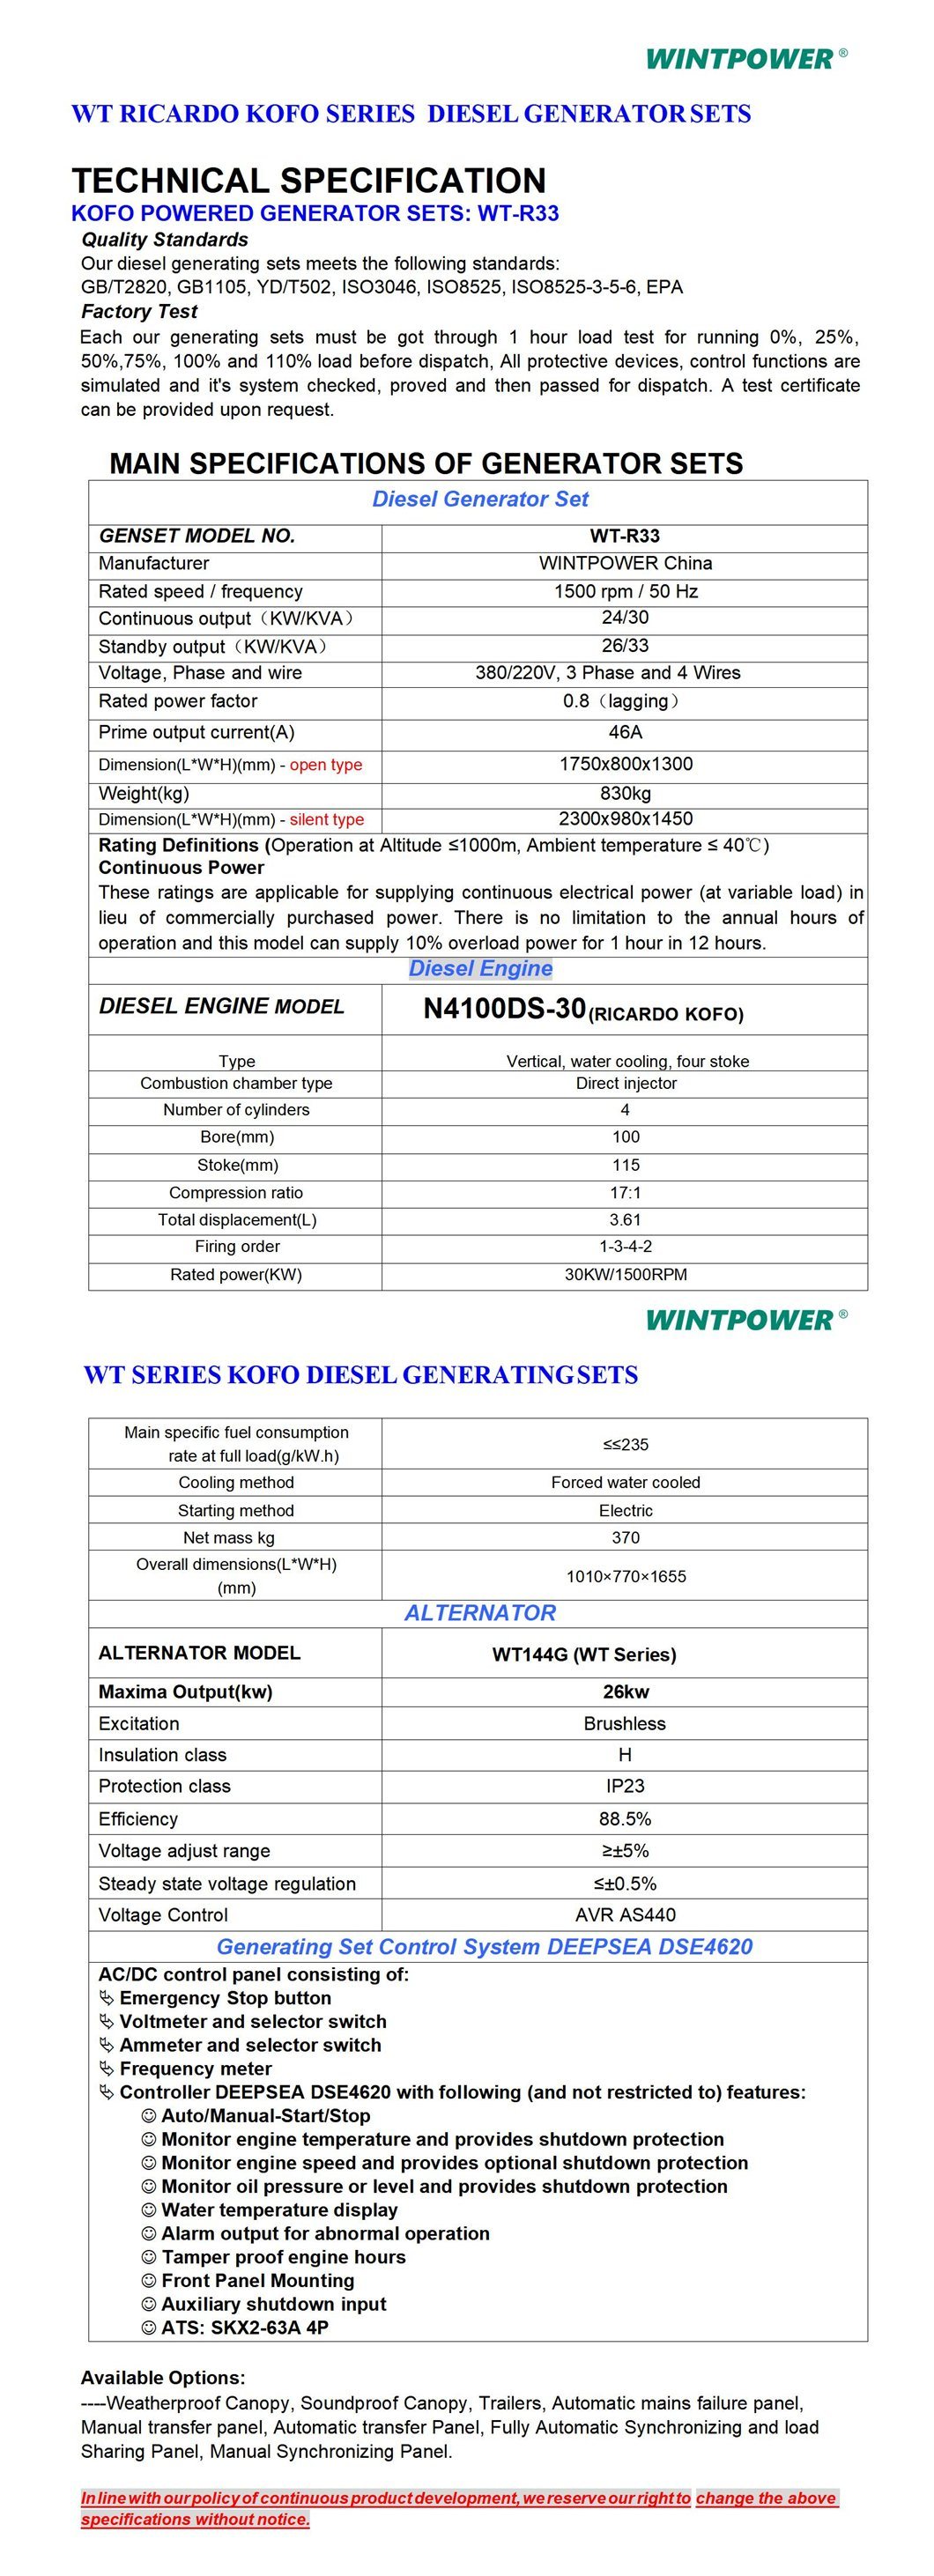 Weichai Kofo Ricardo Set Generator Daya Diesel Dg Genset 30kVA N4100ds-30 40kVA N4105ds-38 50kVA N4105ds-42 60kVA N4105zds 75kVA N4105zds 803kVA Rlds105kVA